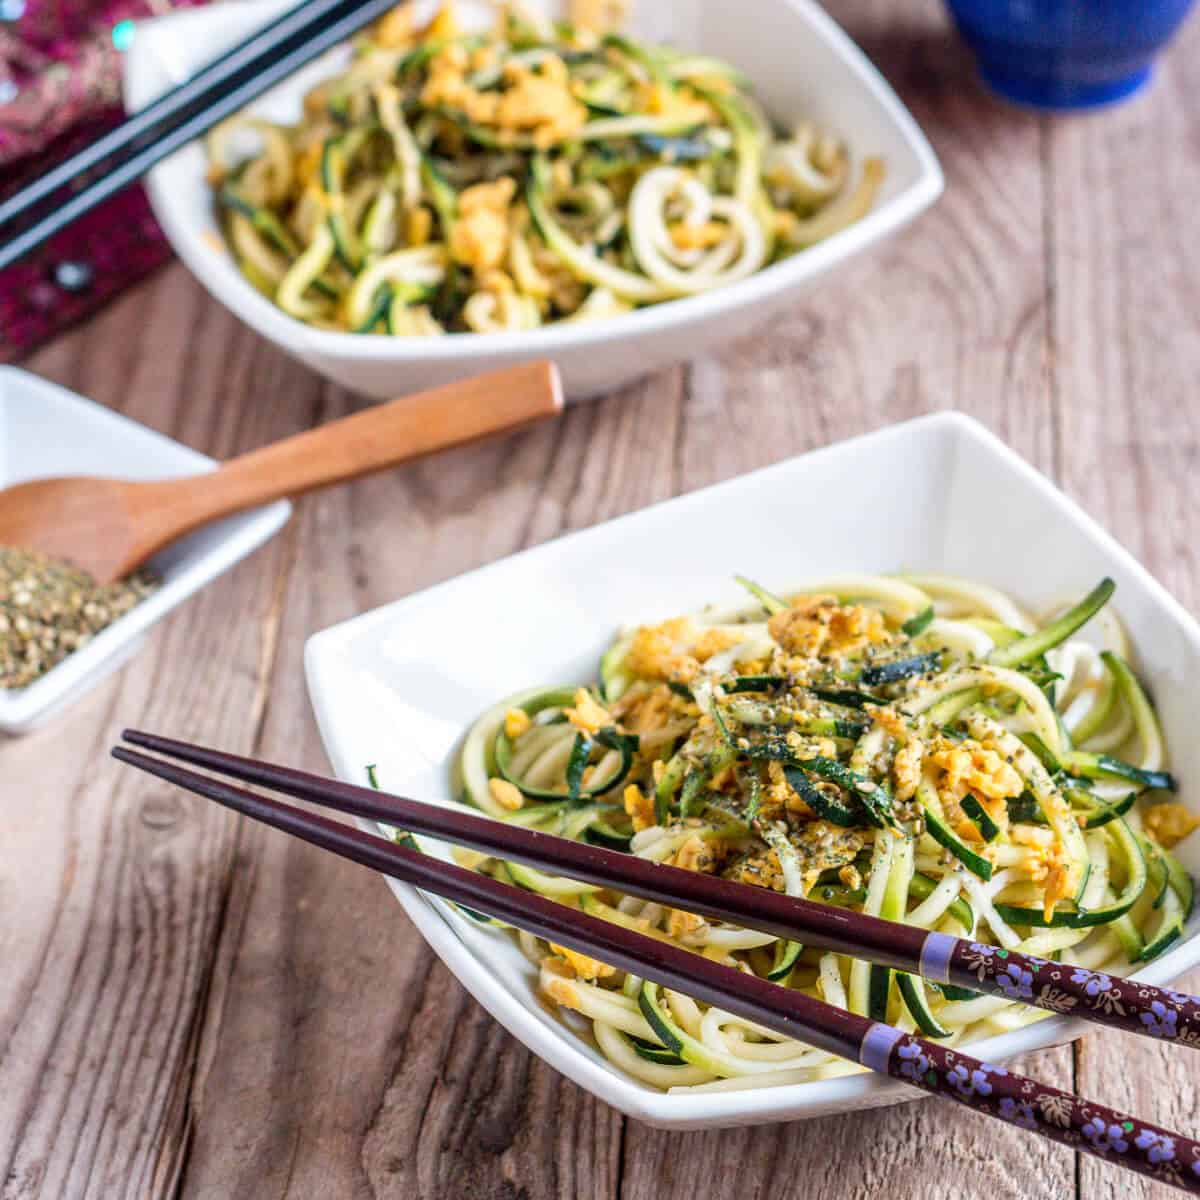 https://thethingswellmake.com/wp-content/uploads/2014/01/64-no-wm-asian-fried-zucchini-noodles-stir-fry-3.jpg